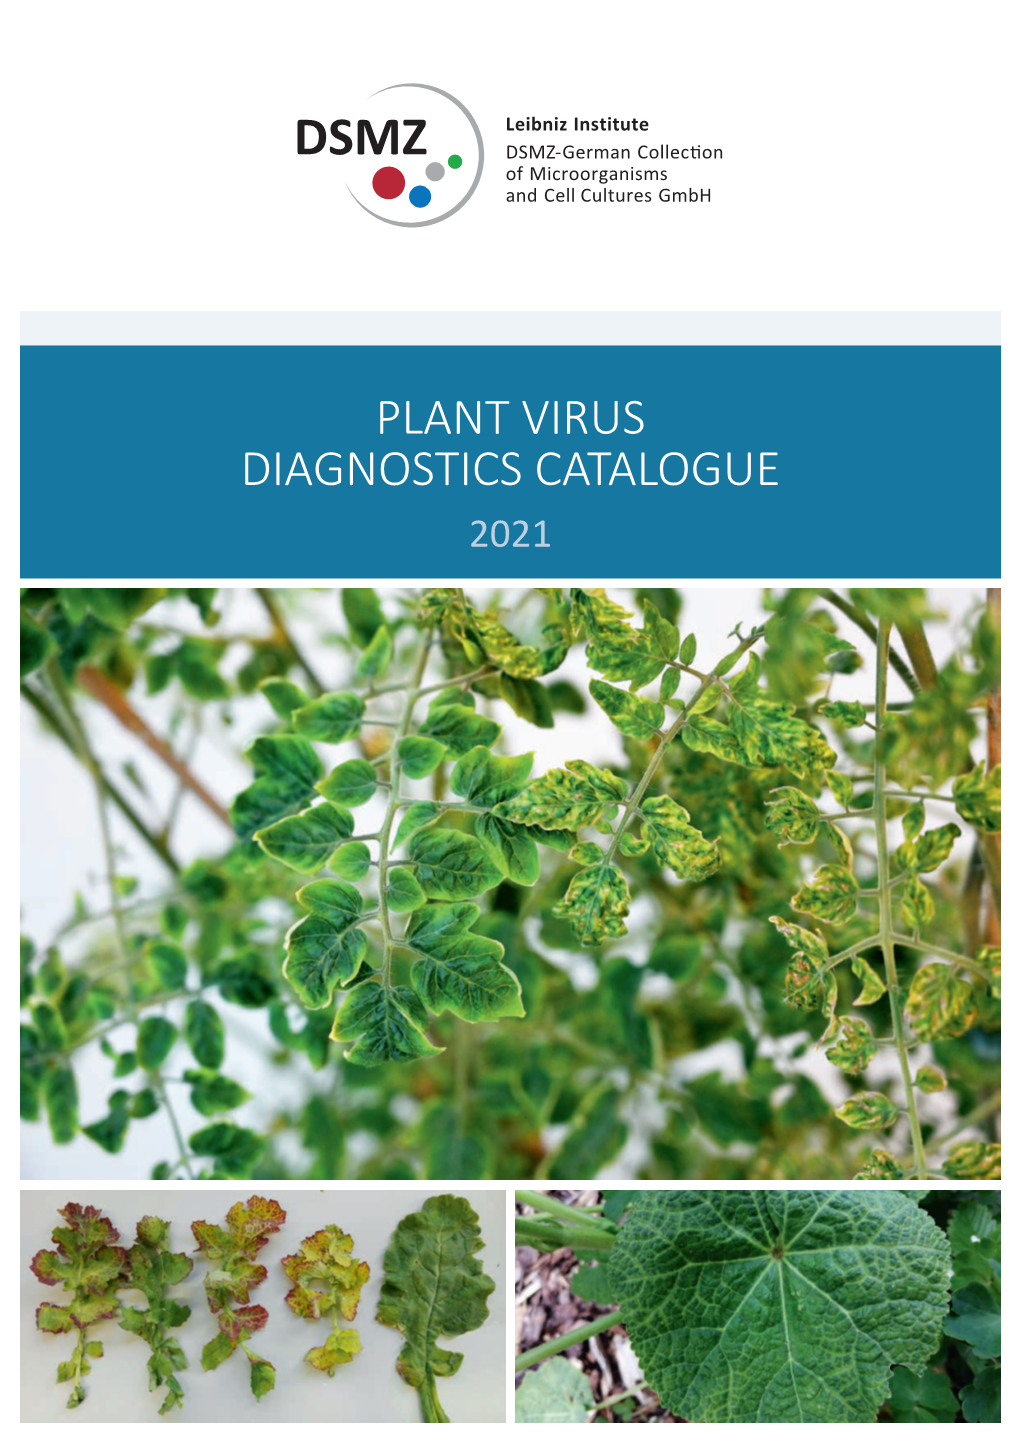 PLANT VIRUS DIAGNOSTICS CATALOGUE 2021 Images on Front Cover Center: Leaf Curl Symptoms from Tomato (Cv